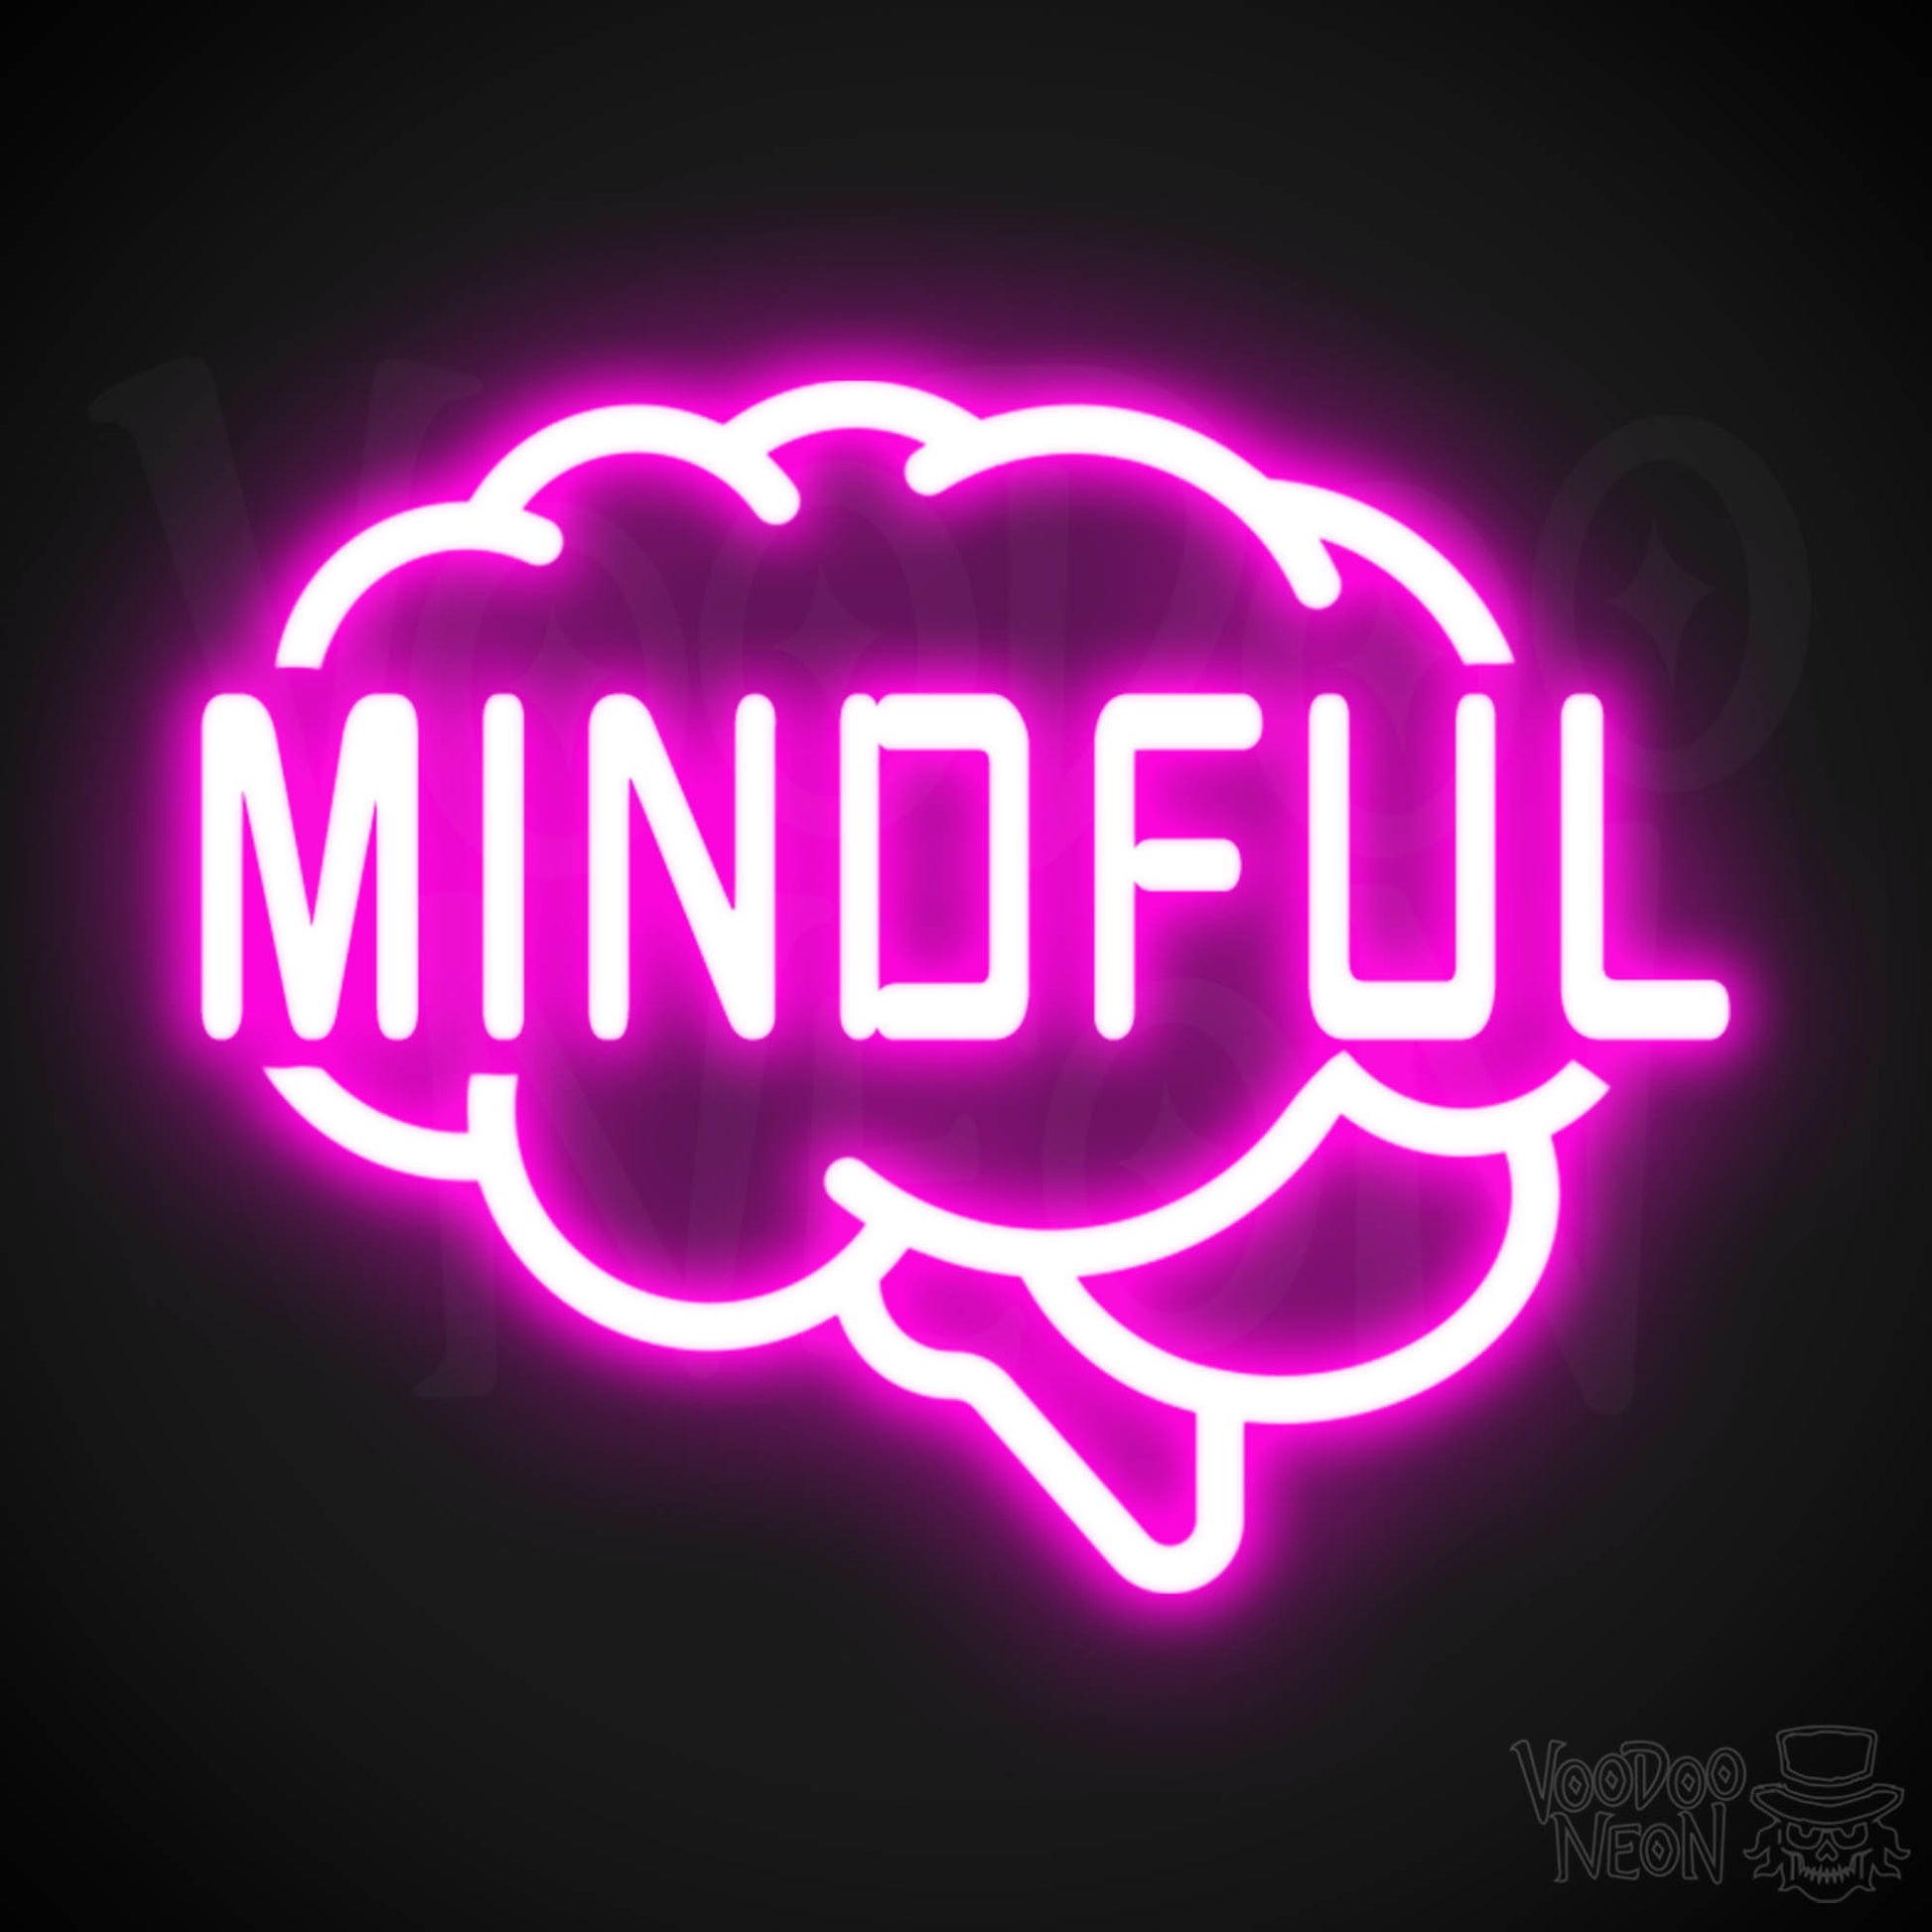 Mindful Neon Sign - Neon Mindful Sign - LED Sign - Color Pink